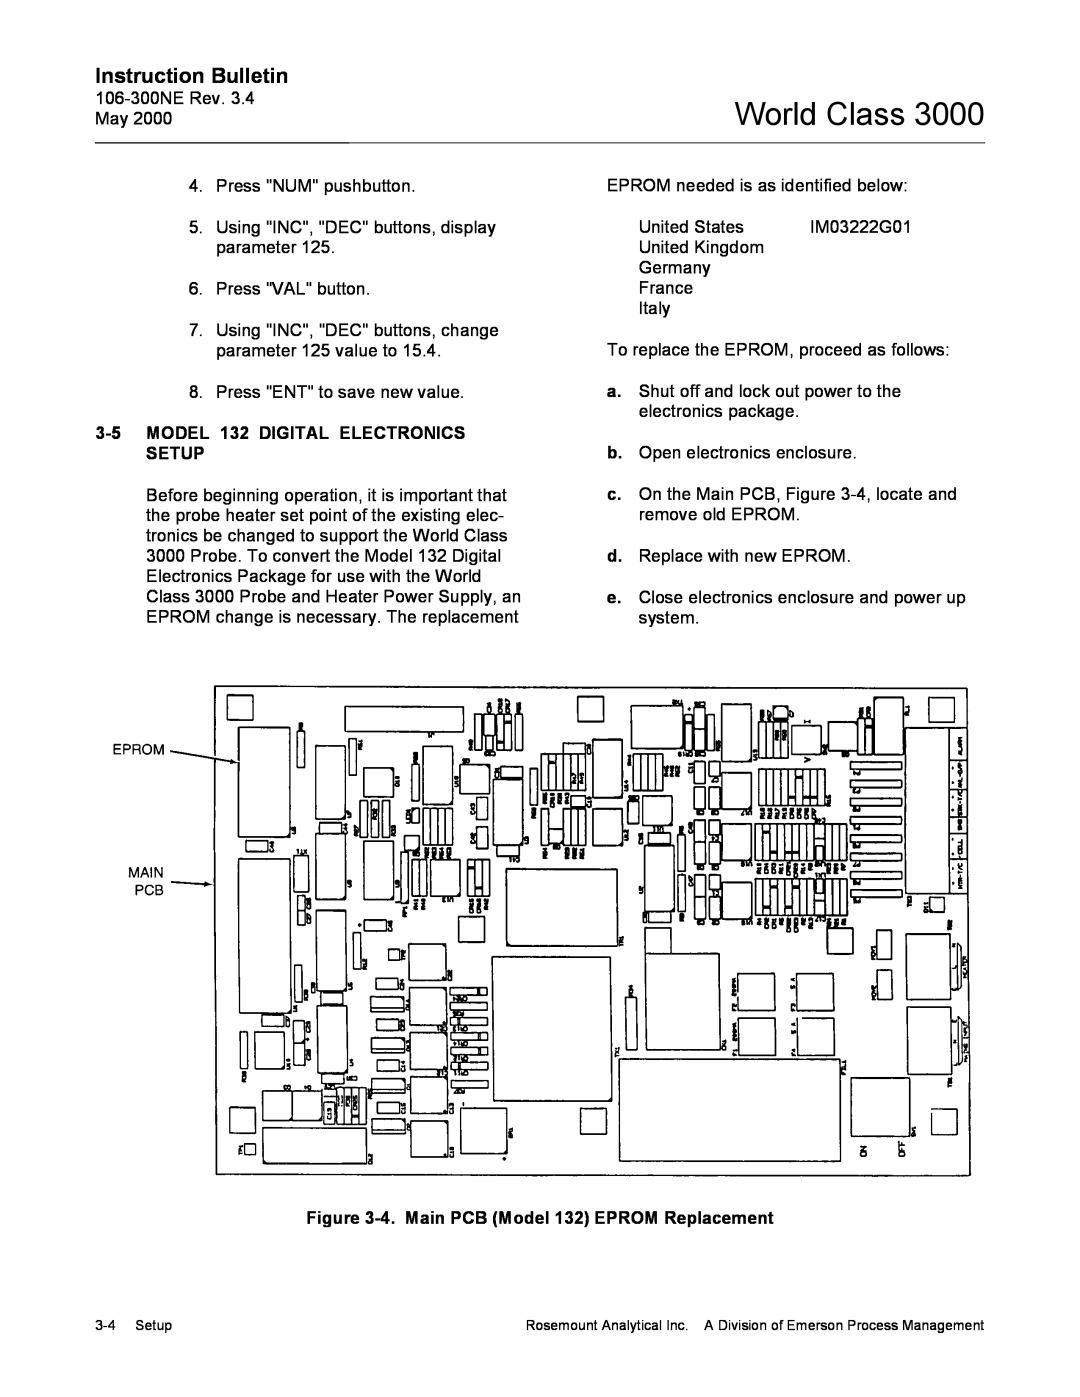 Emerson 3000 manual Instruction Bulletin, 3-5MODEL 132 DIGITAL ELECTRONICS SETUP, 4.Main PCB Model 132 EPROM Replacement 